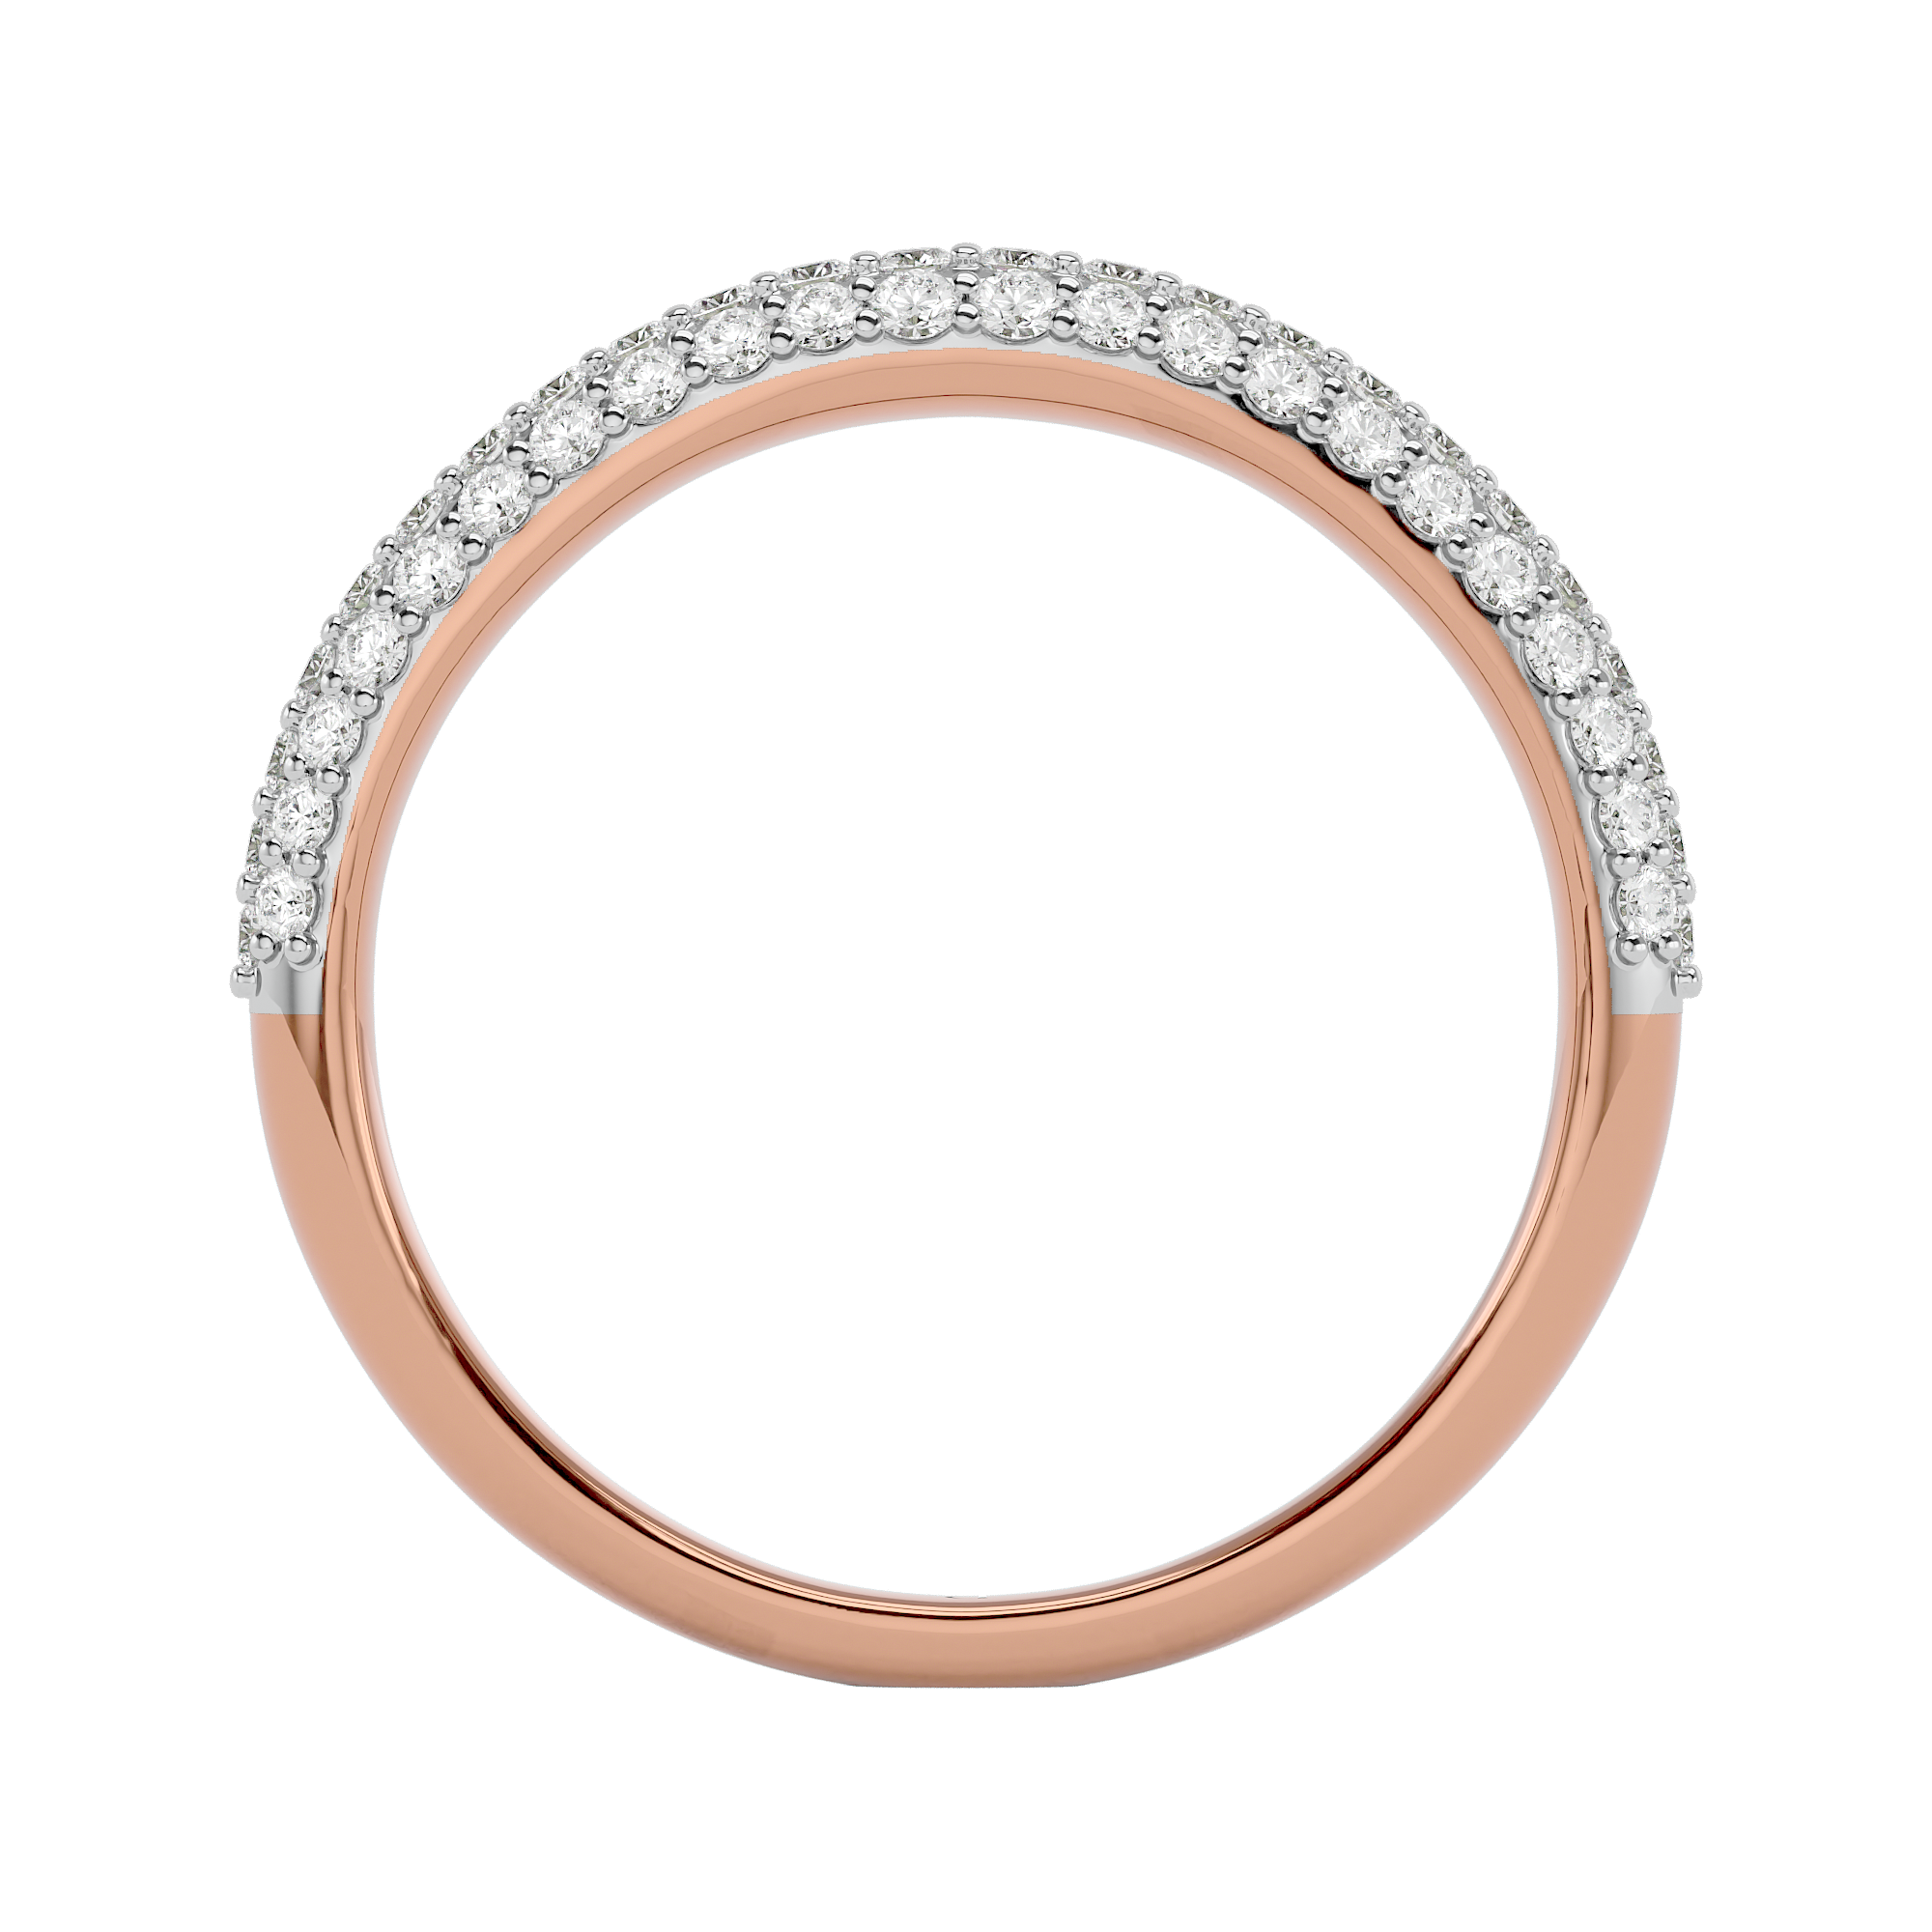 1 Carat Round Cut Diamond Ring in 14kt Rose Gold - Blu Diamonds